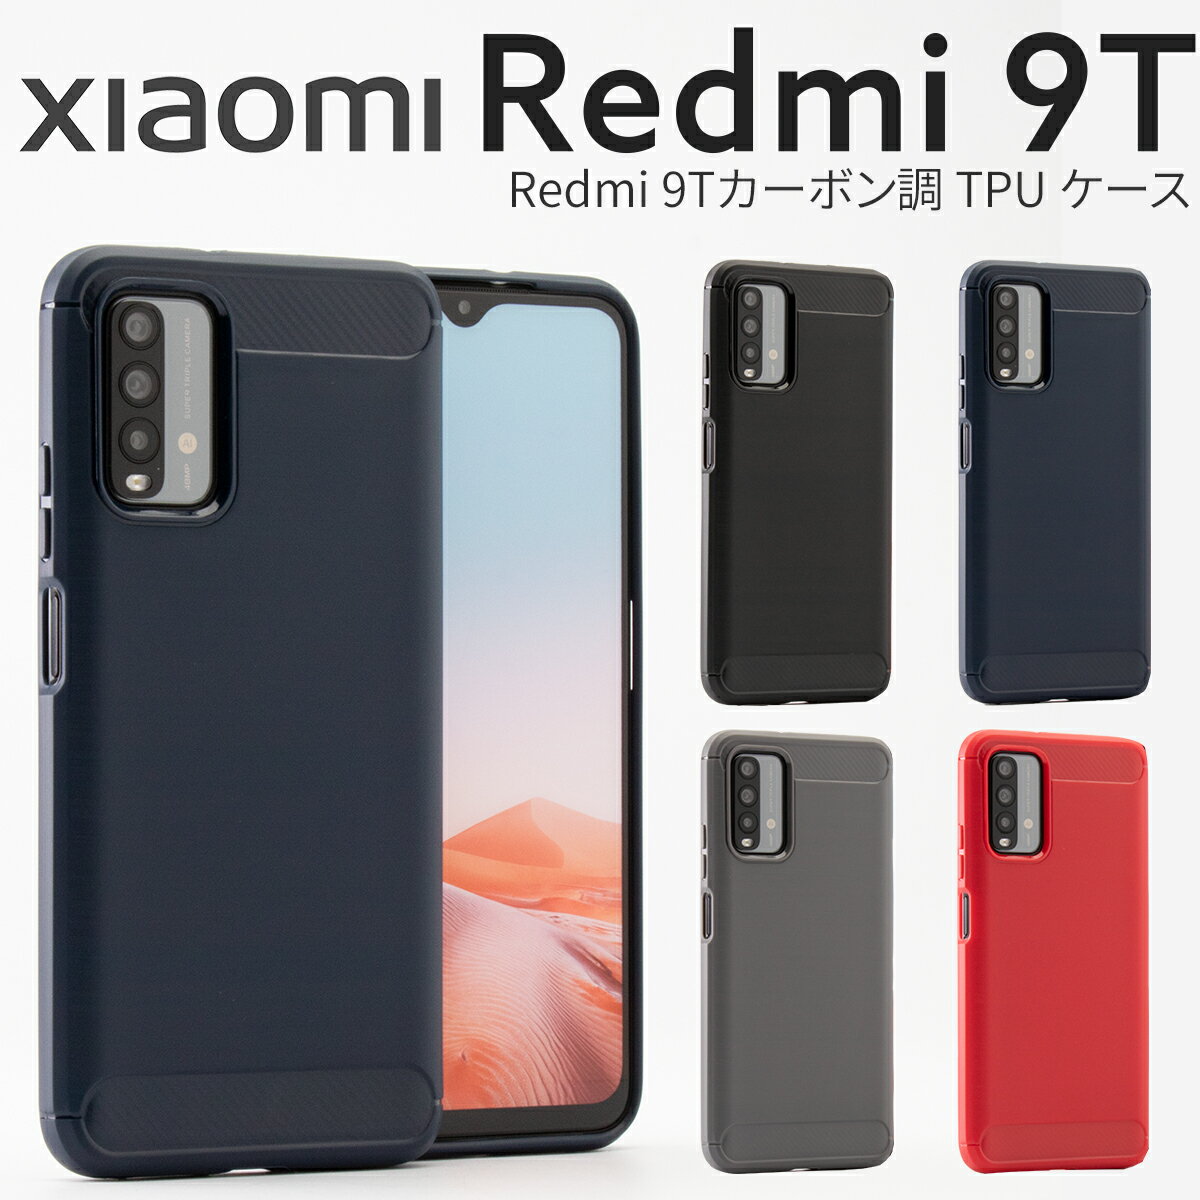  redmi 9tケース redmi 9t ケース Xiaomi Redmi 9T ケース カバー 耐衝撃 かっこいい スマホケース 韓国 メンズ ブランド カーボン調 カーボン調TPUケース シャオミ ソフトケース 携帯ケース 携帯カバー